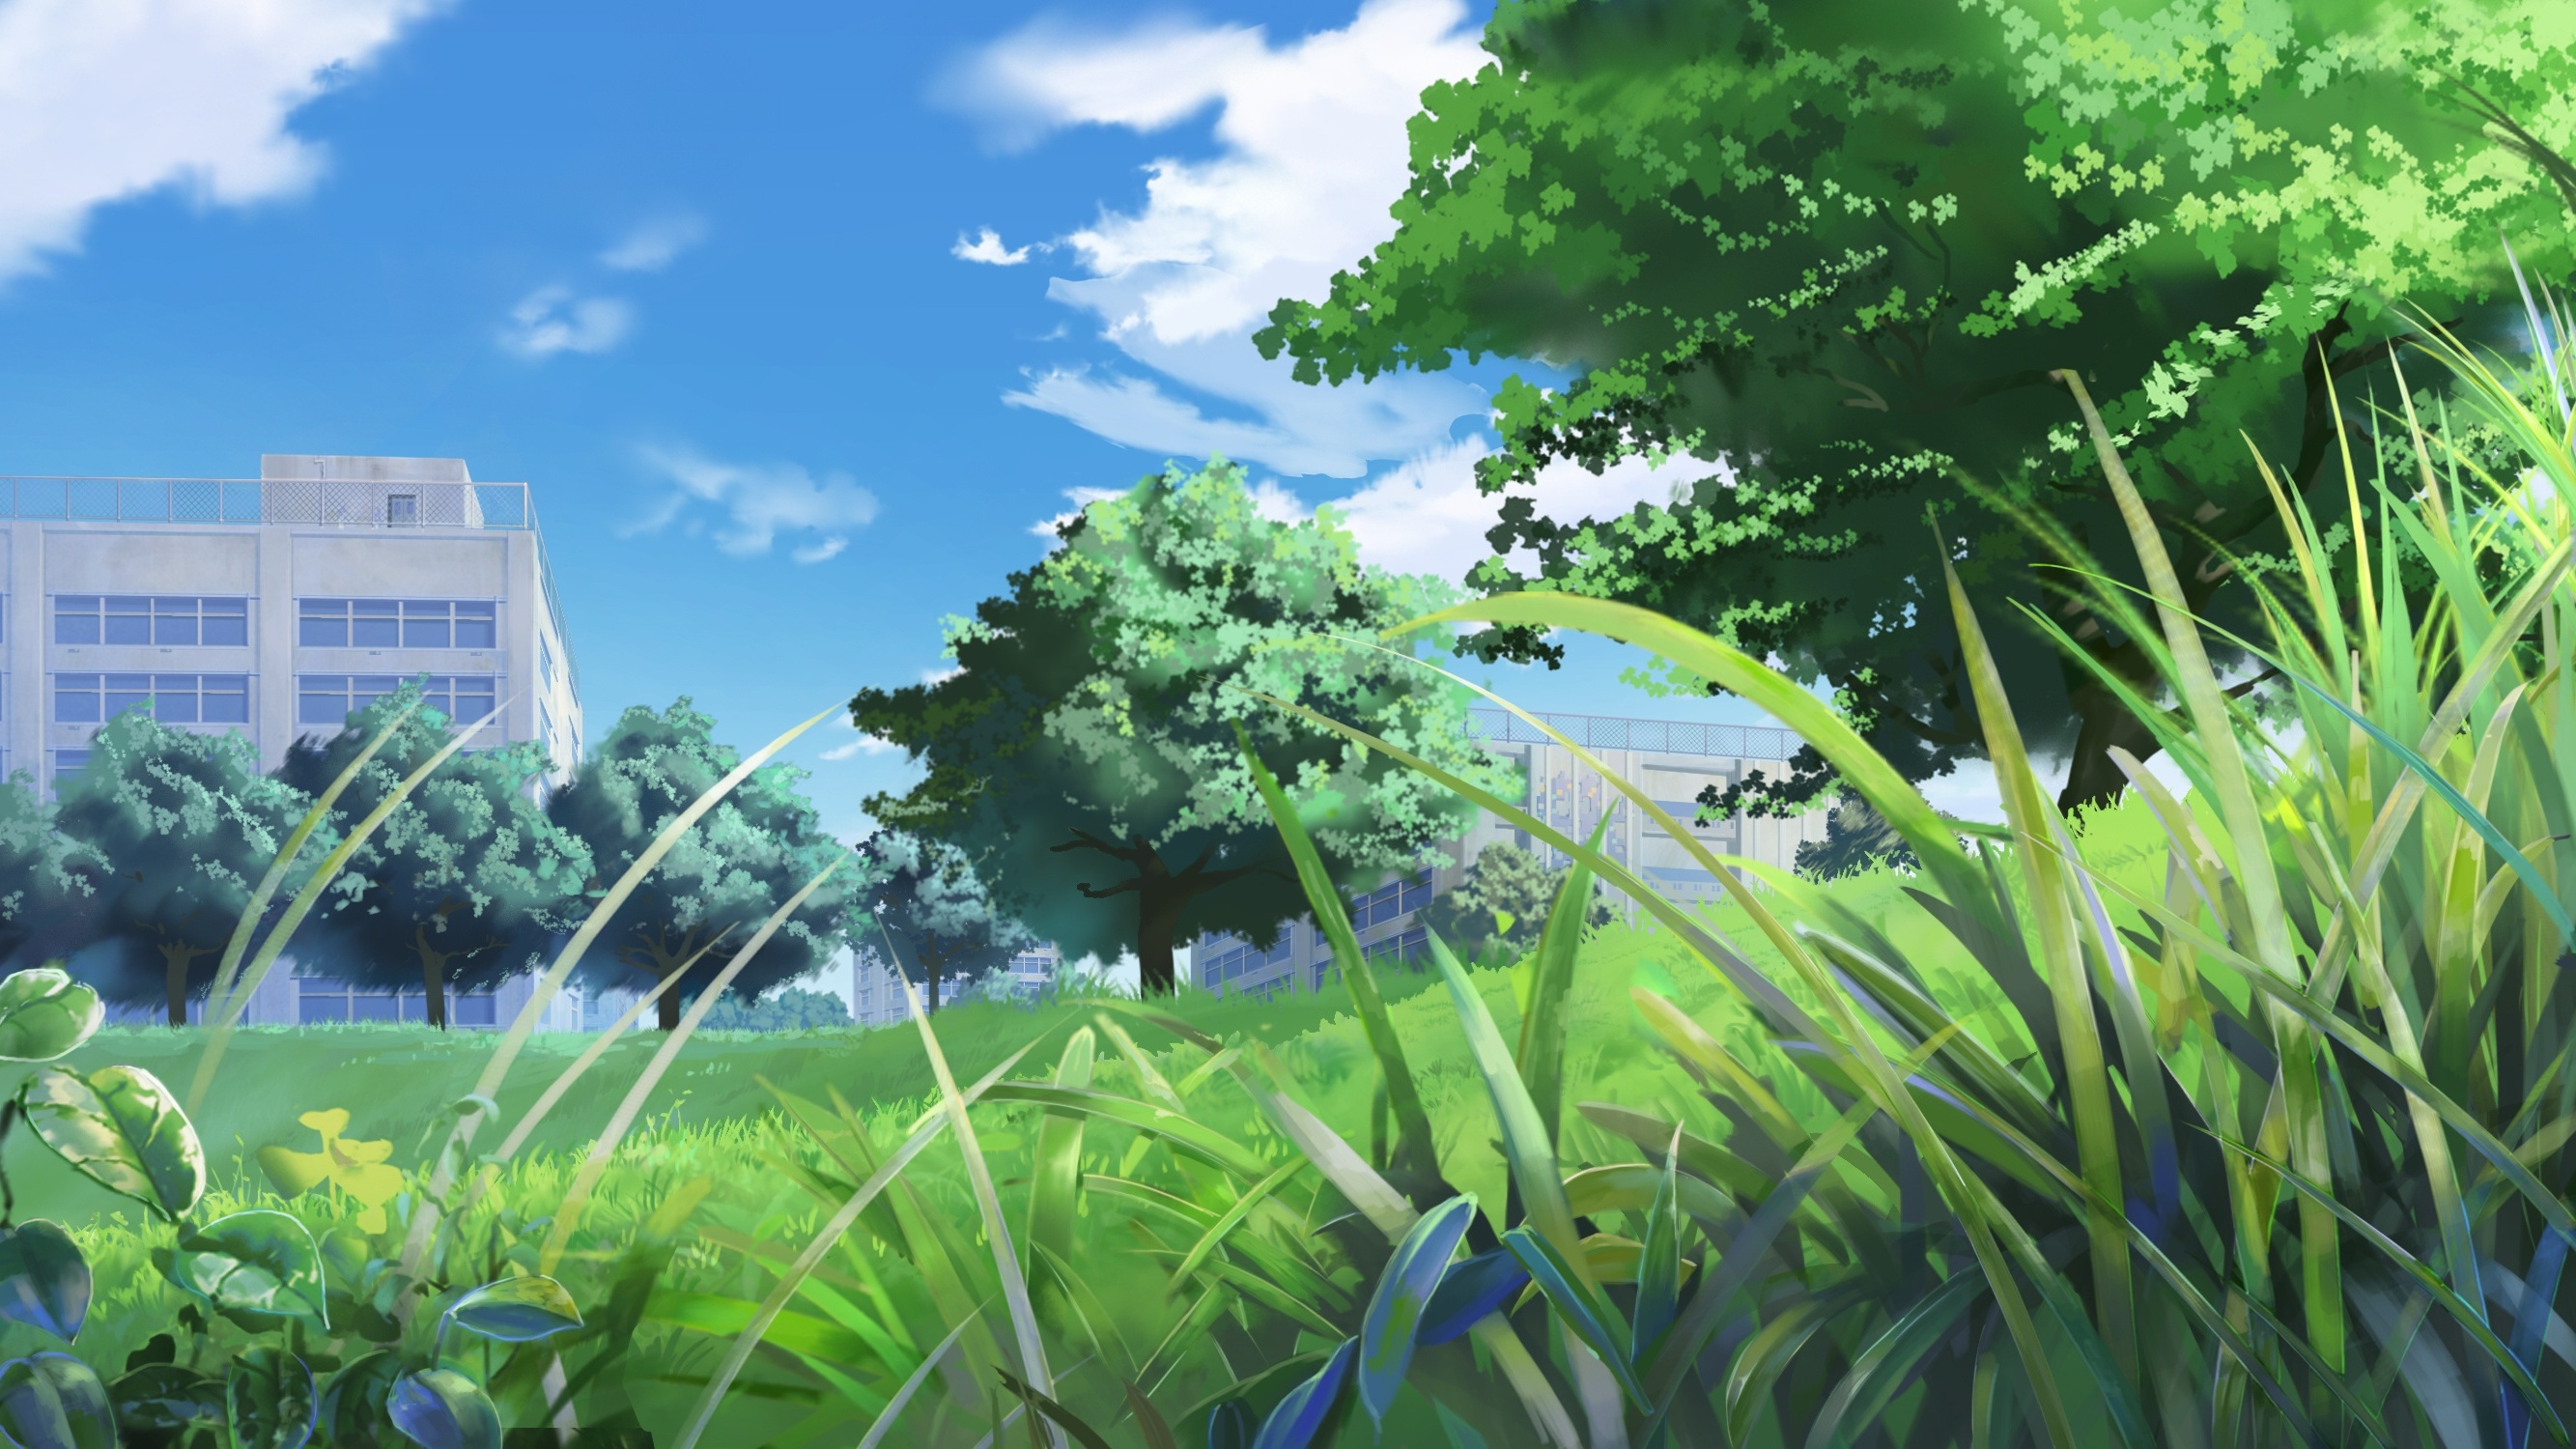 Anime Grass Field Wallpapers